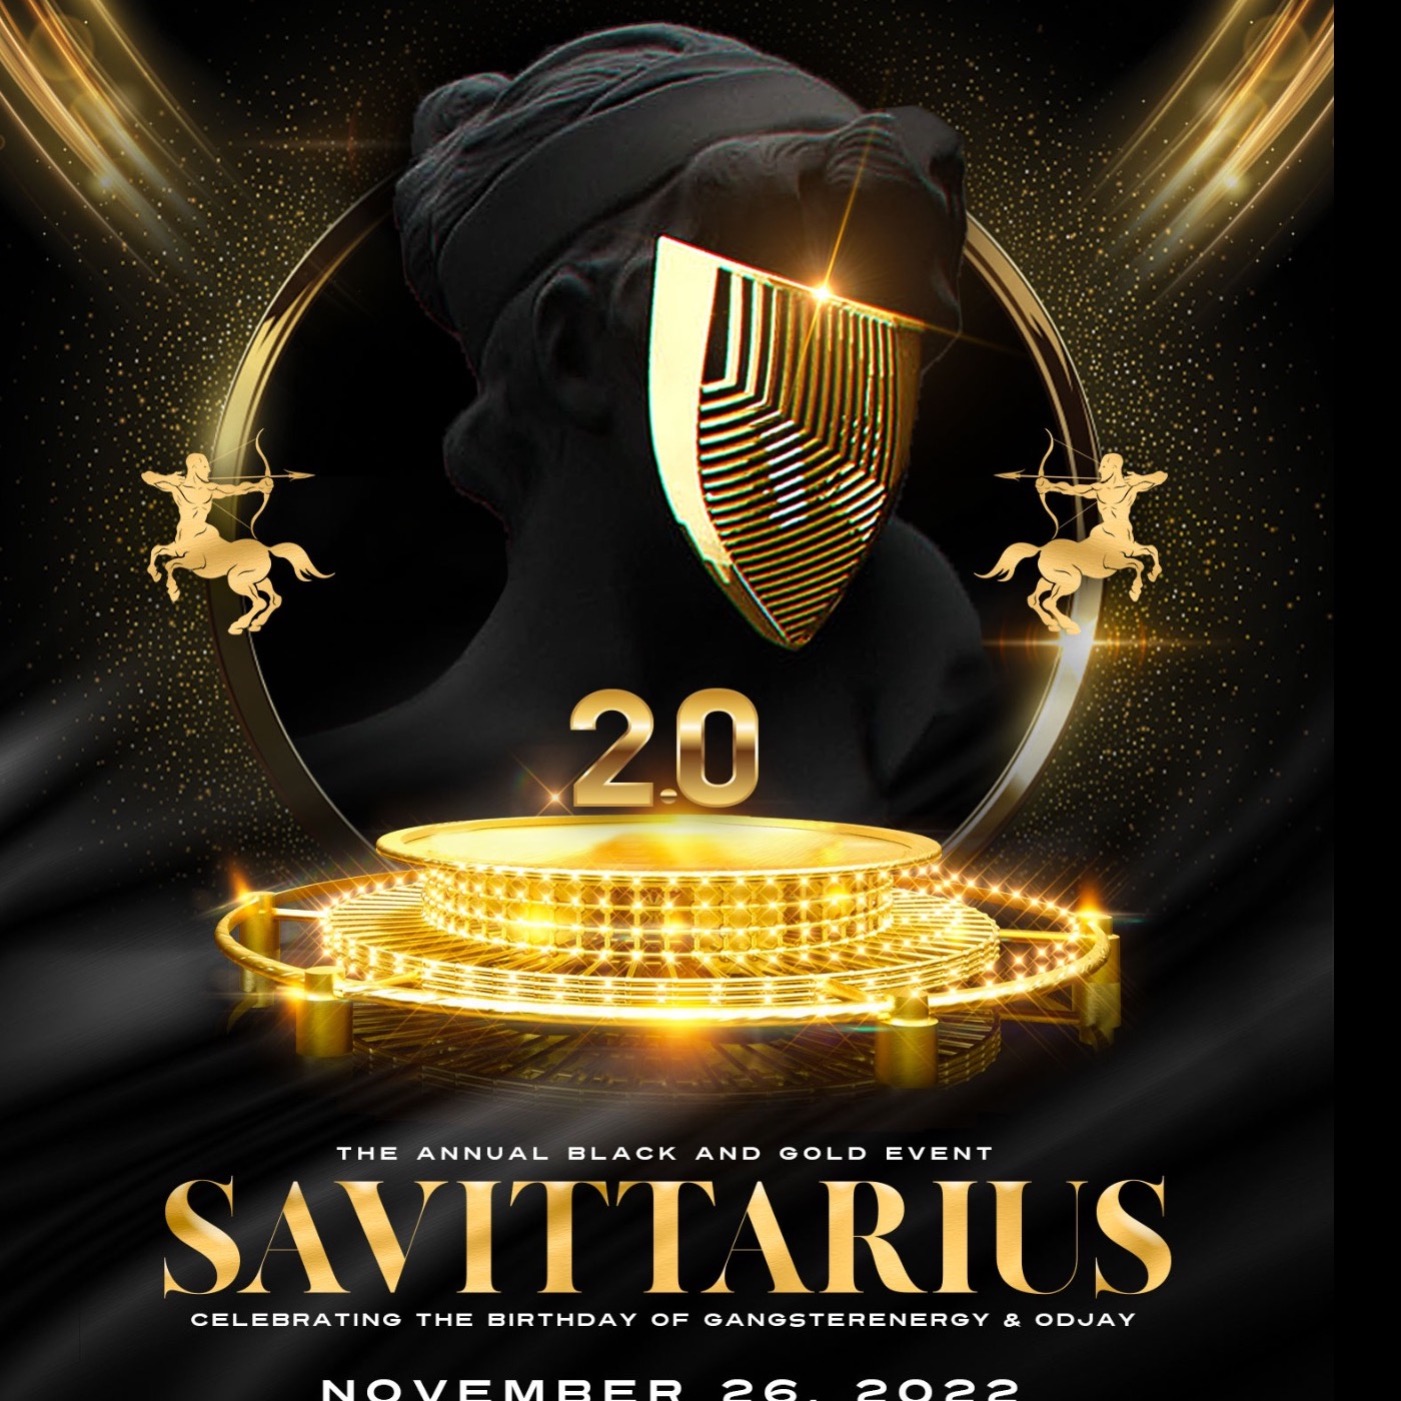 SAVITTARIUS 2.0 {THE ANNUAL BLACK AND GOLD EVENT}